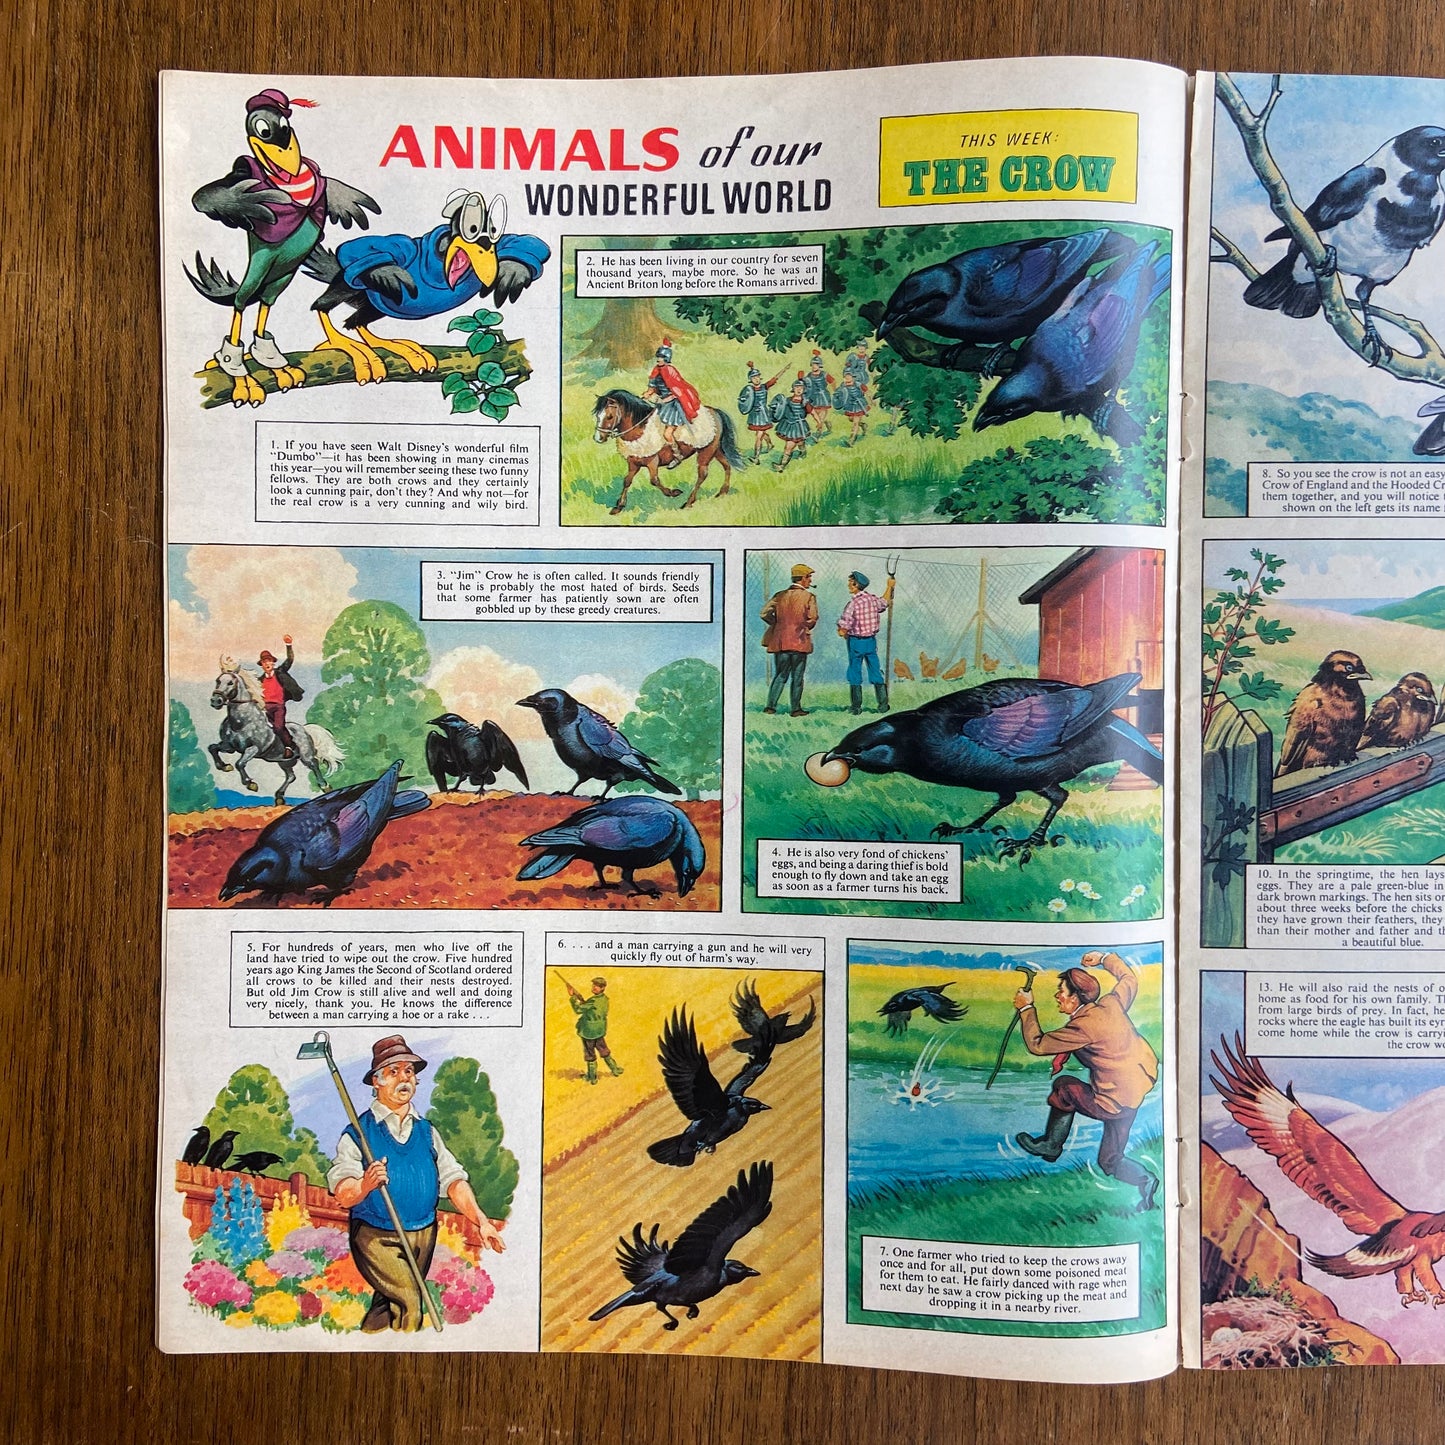 Vintage The Wonderful World of Disney Comic Issue 5